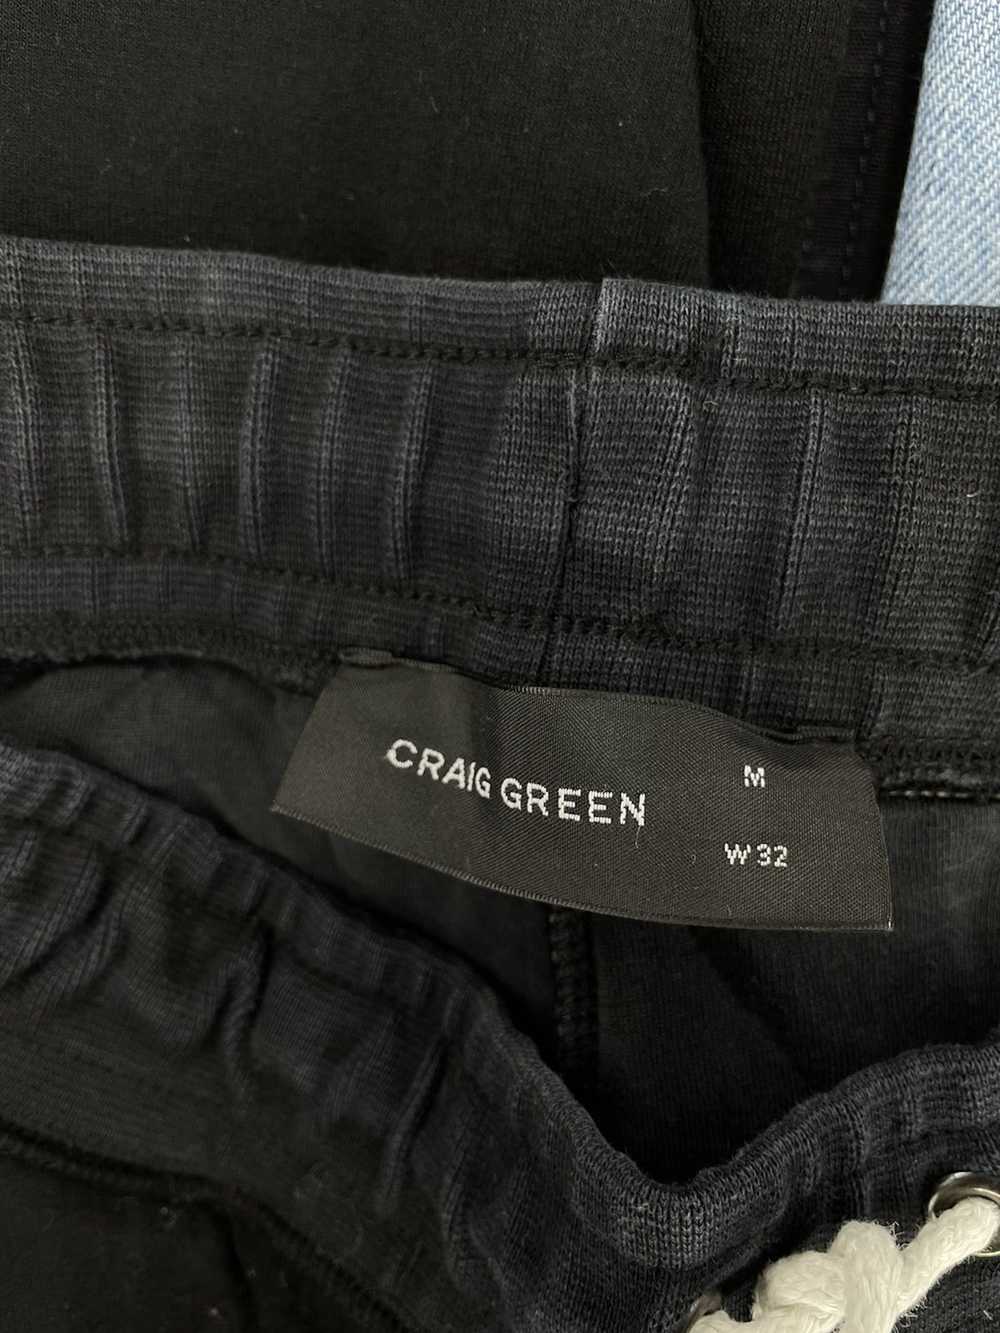 Craig Green Craig Green Sweatpants - image 8